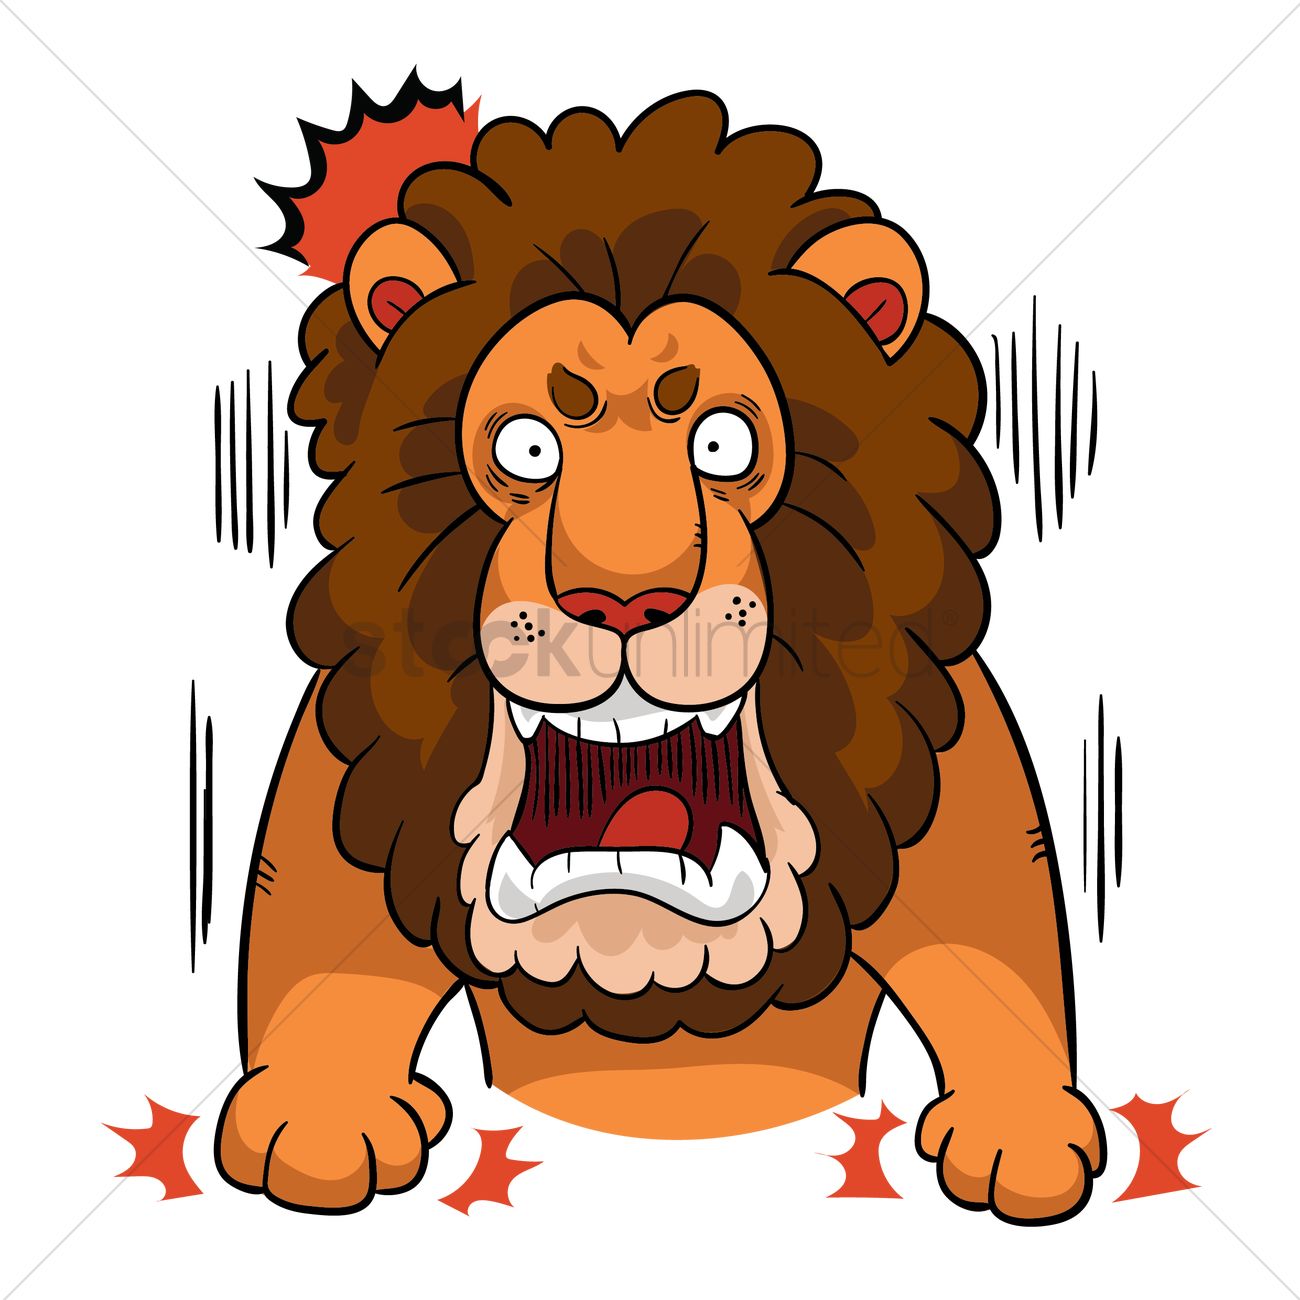 fierce lion cartoon